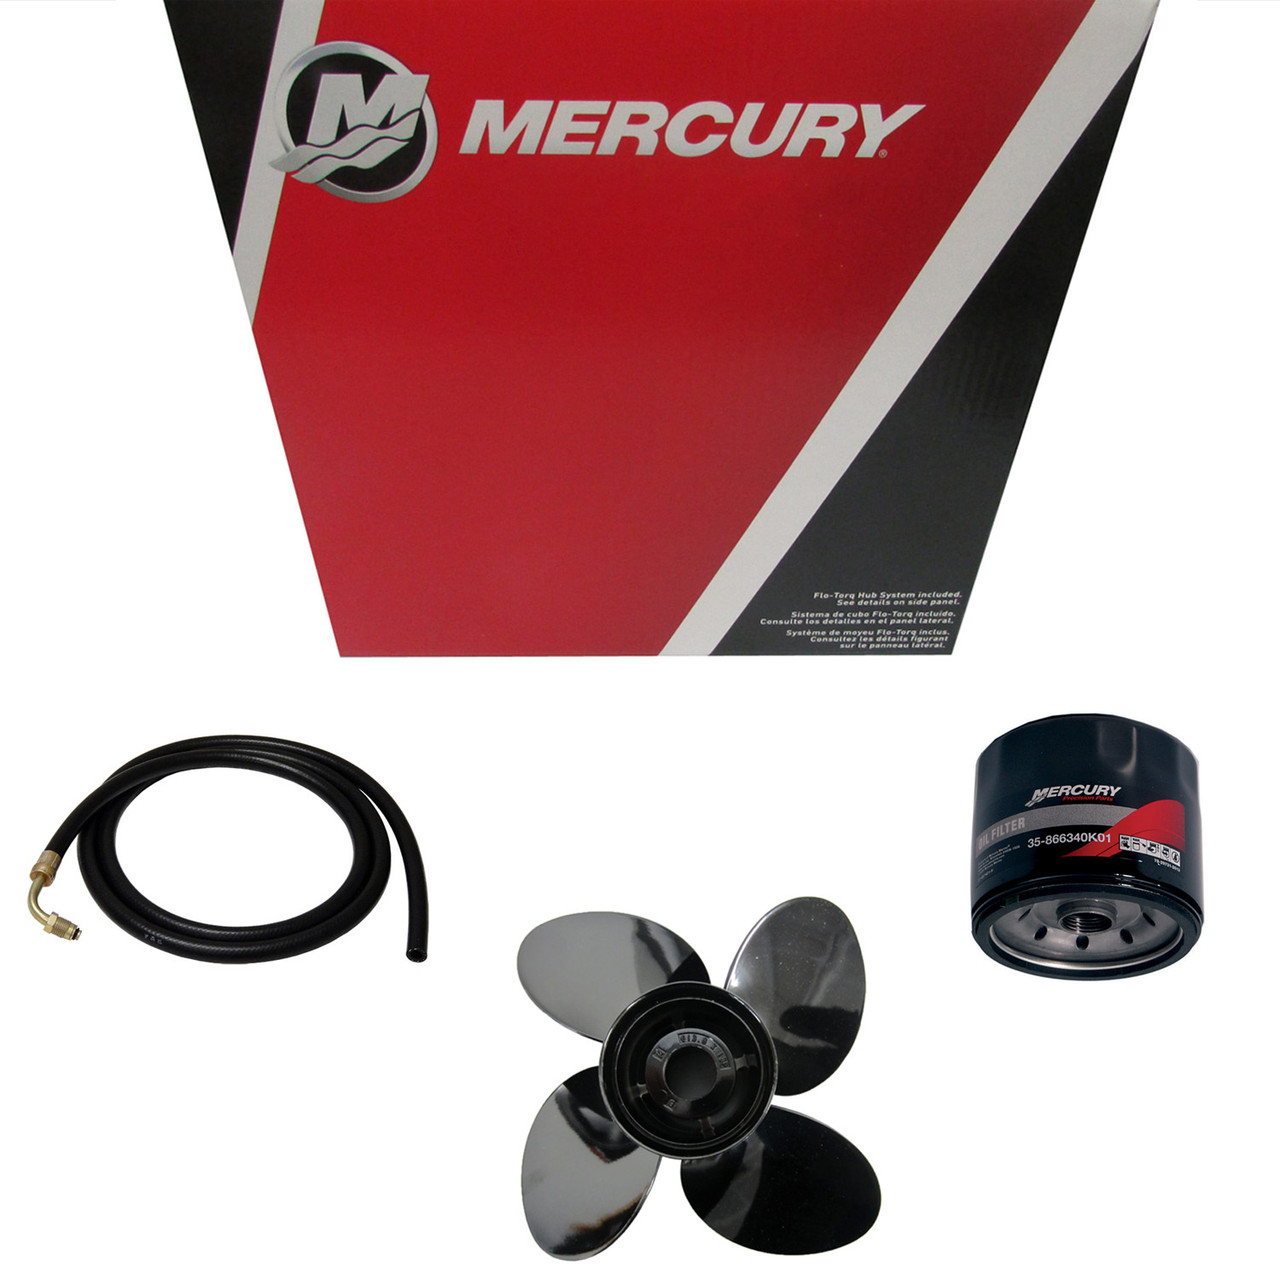 Mercury Marine / Mercruiser New OEM Trpl Std Helm Kit, 8M0134643